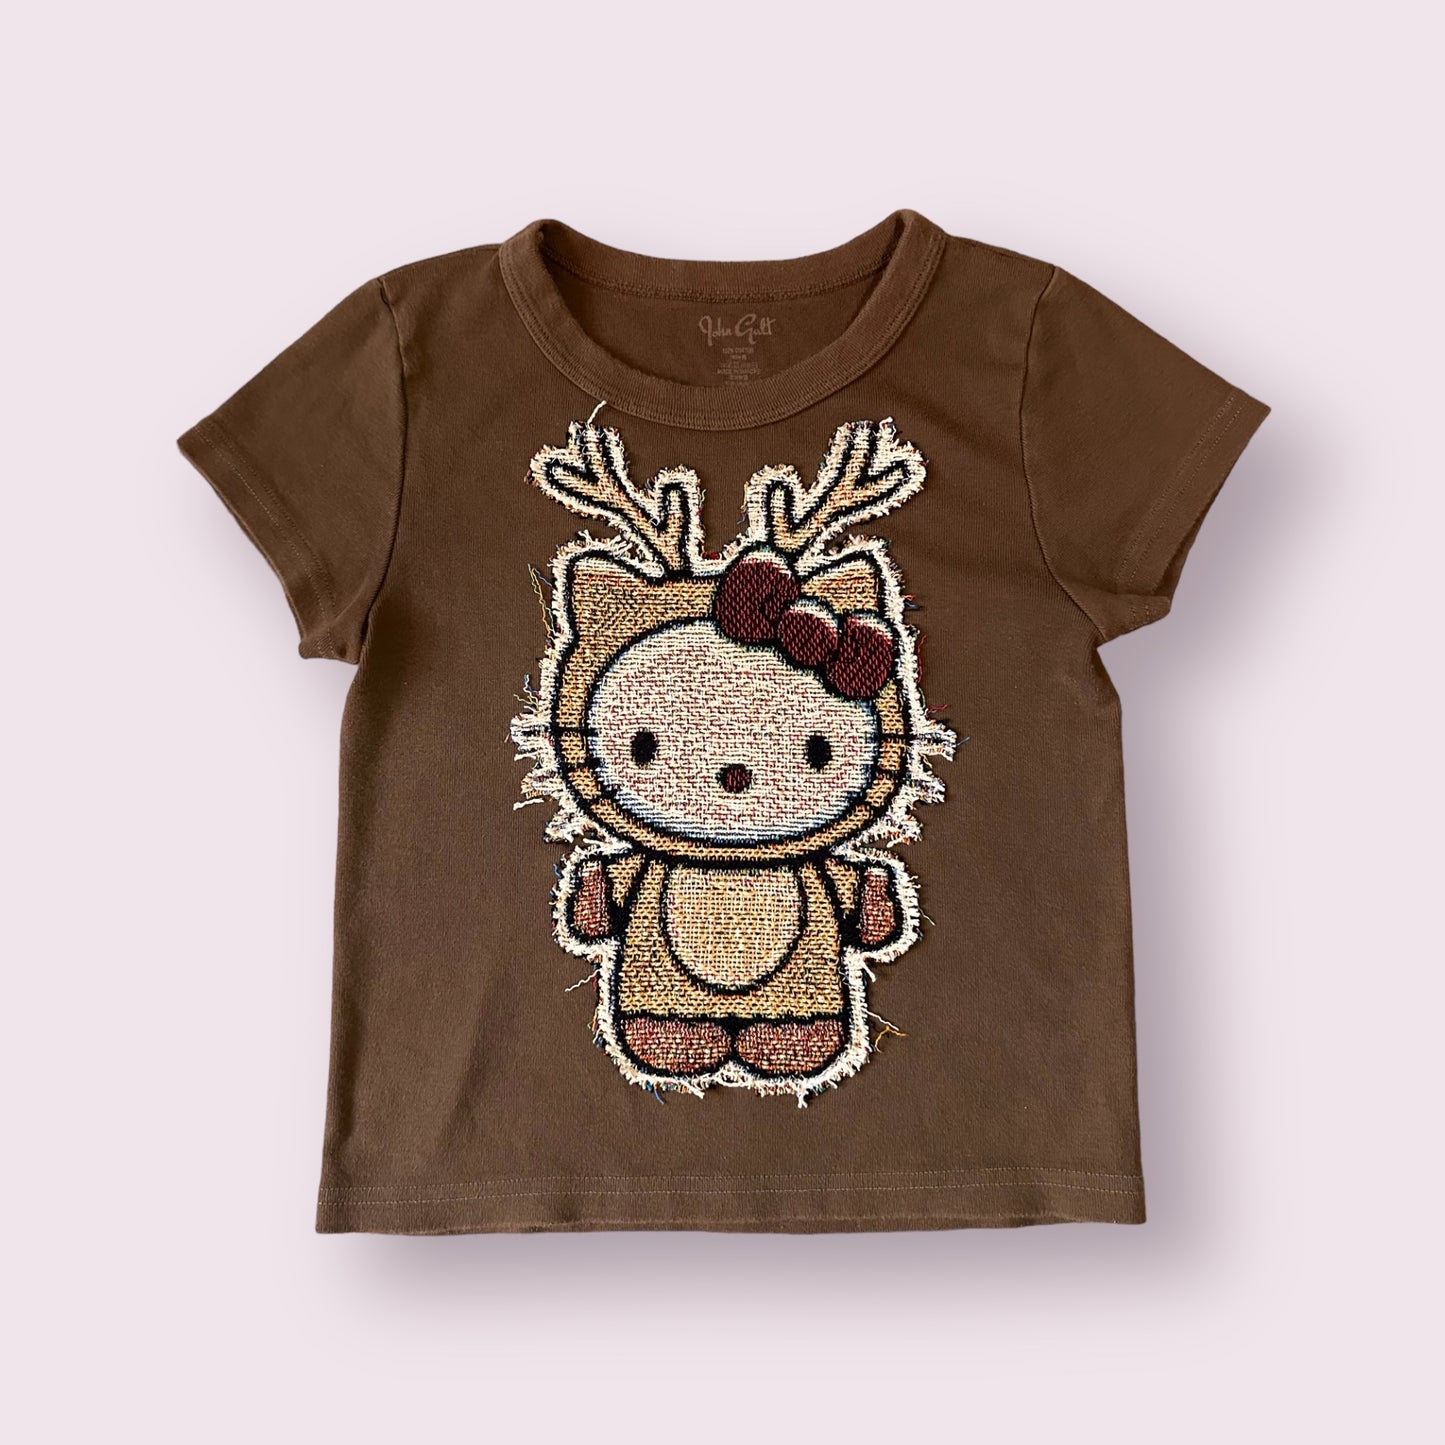 Reindeer Hello Kitty Shirt